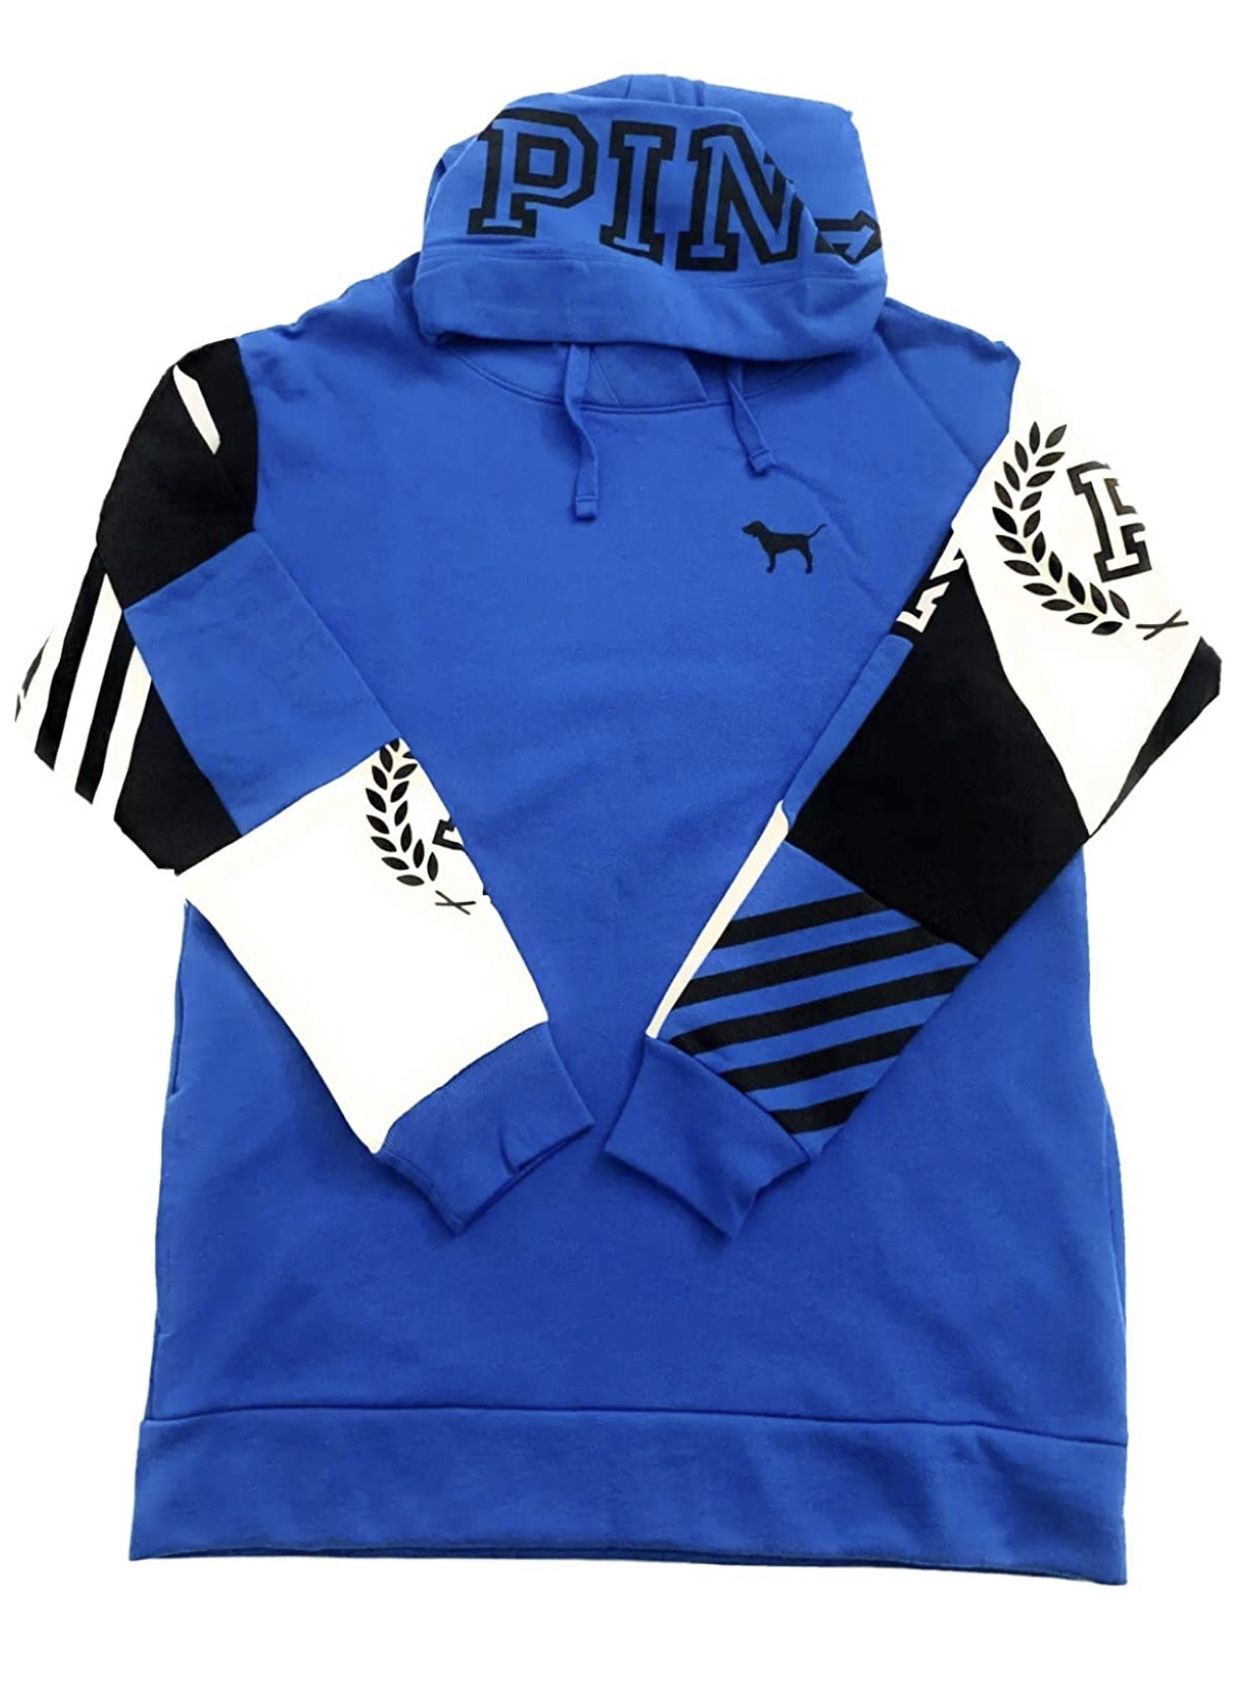 New PINK victoria secret Campus Hoodie Crossover Tunic Sweatshirt Blue XSmall